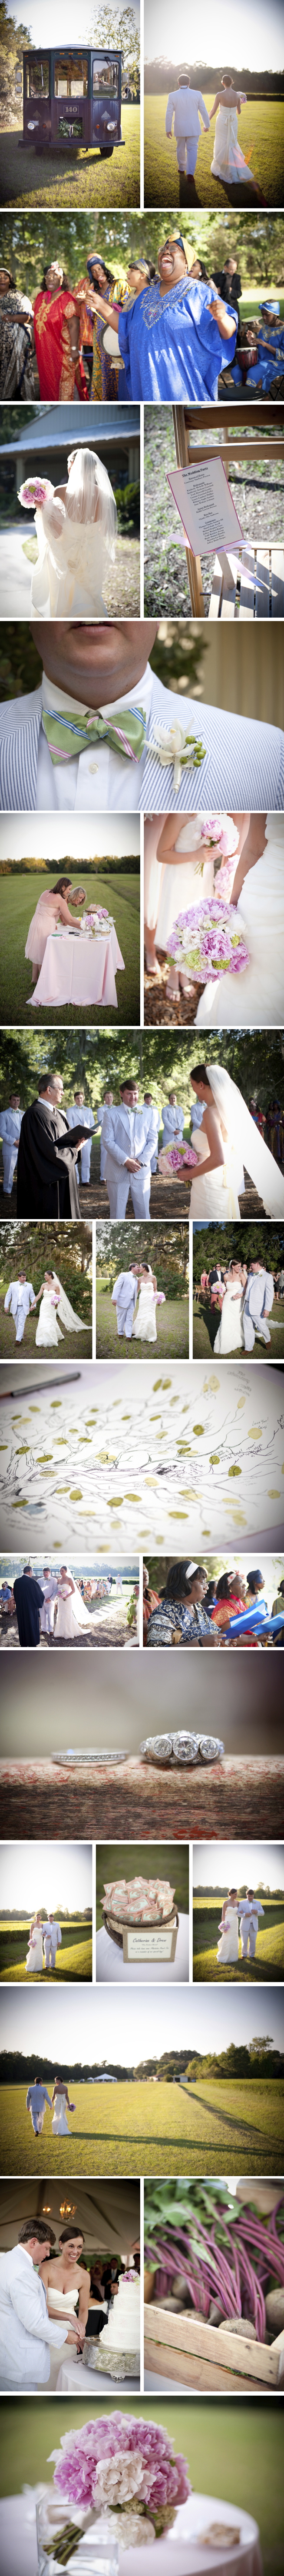 Wedding blogs | wedding pictures